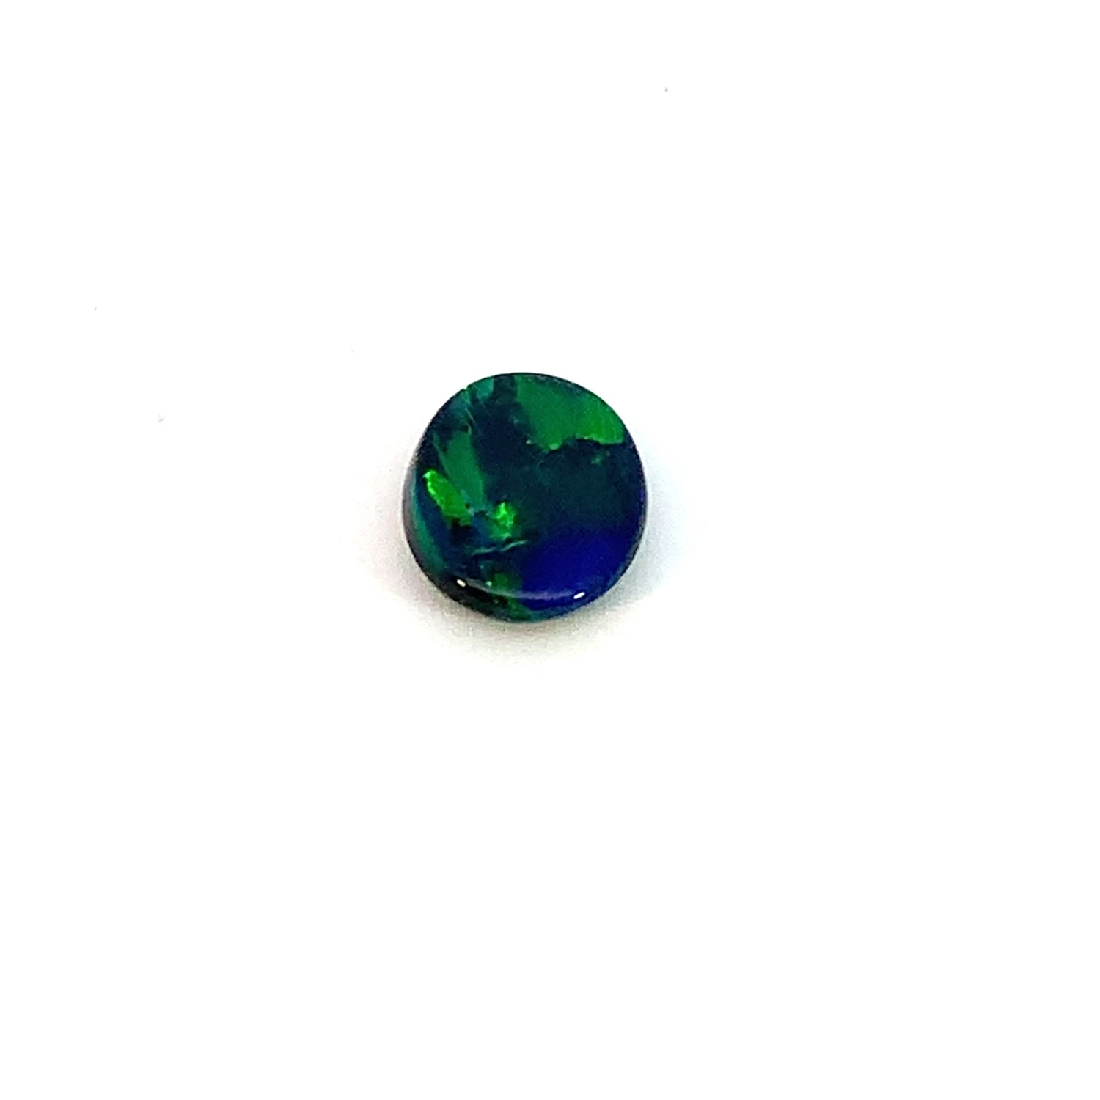 Black Opal 1.18ct Green flash - Masterpiece Jewellery Opal & Gems Sydney Australia | Online Shop